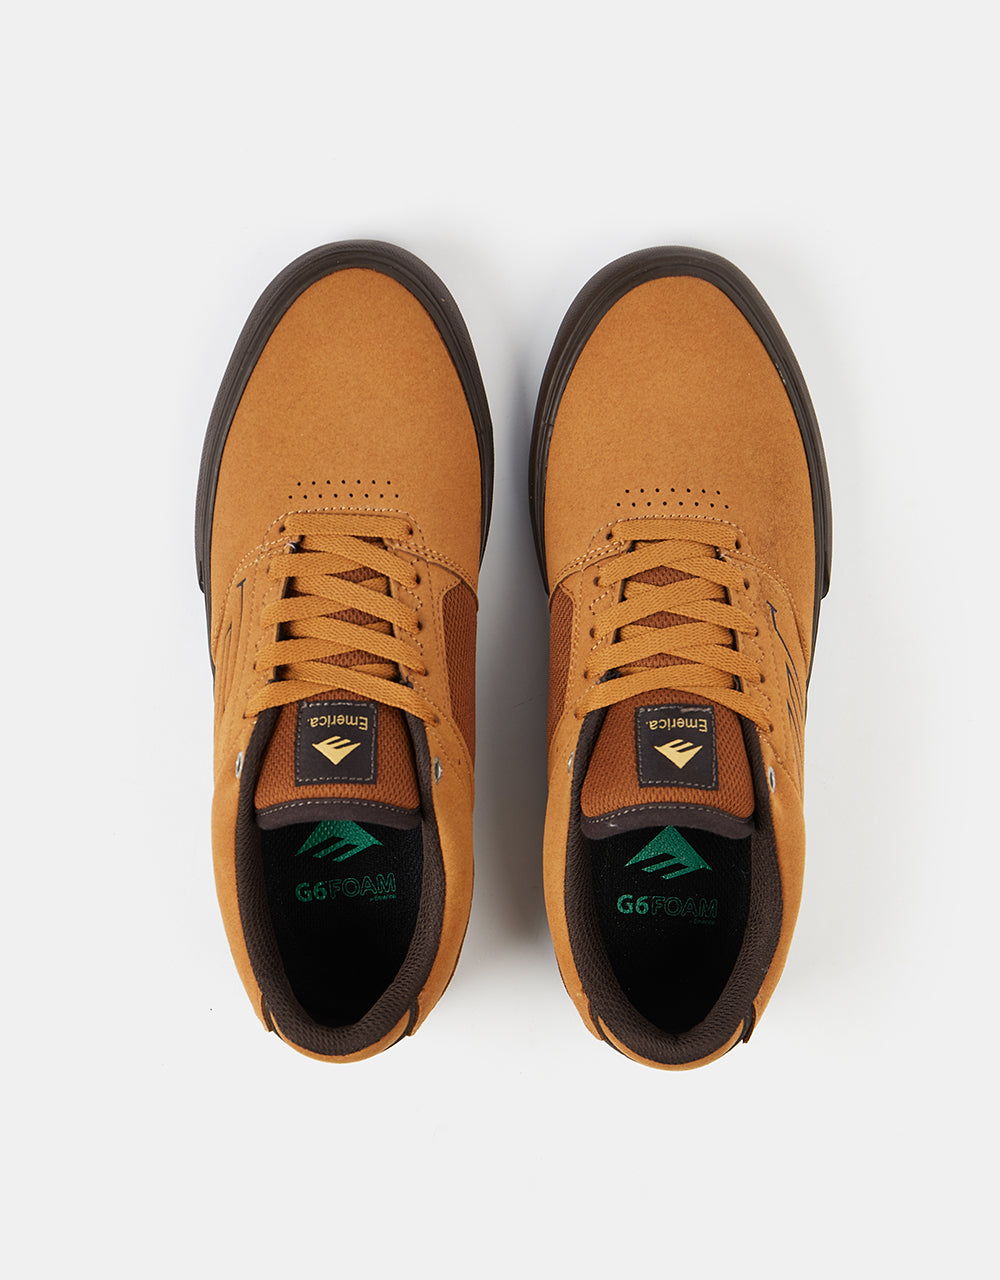 Emerica The Low Vulc Skate Shoes - Tan/Brown